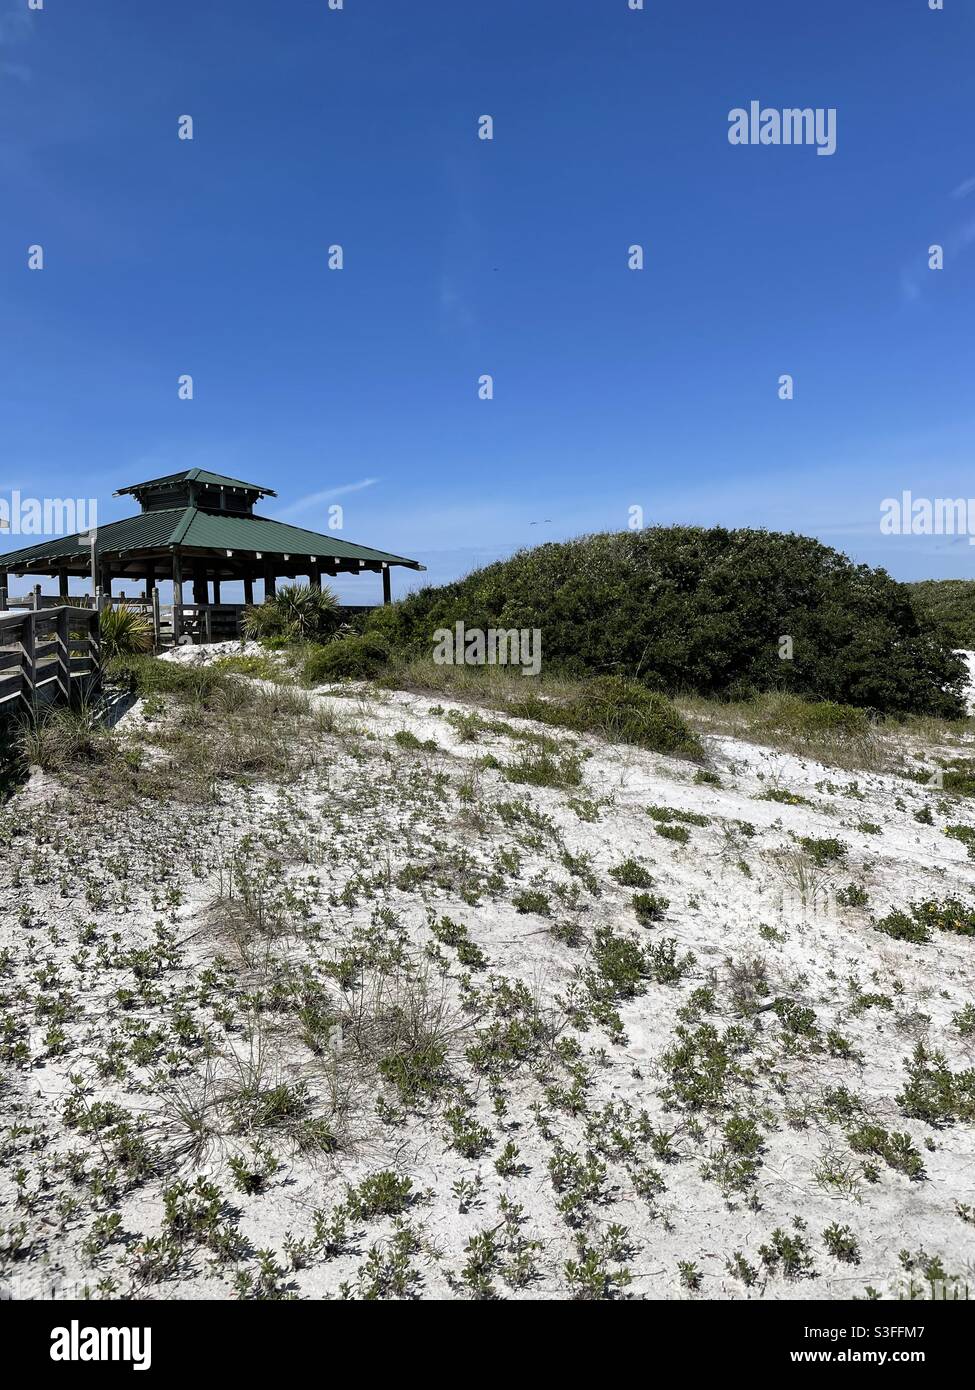 Street view of white sand dunes and public picnic pavilion at John Beasley park fort Walton Beach Florida Stock Photo